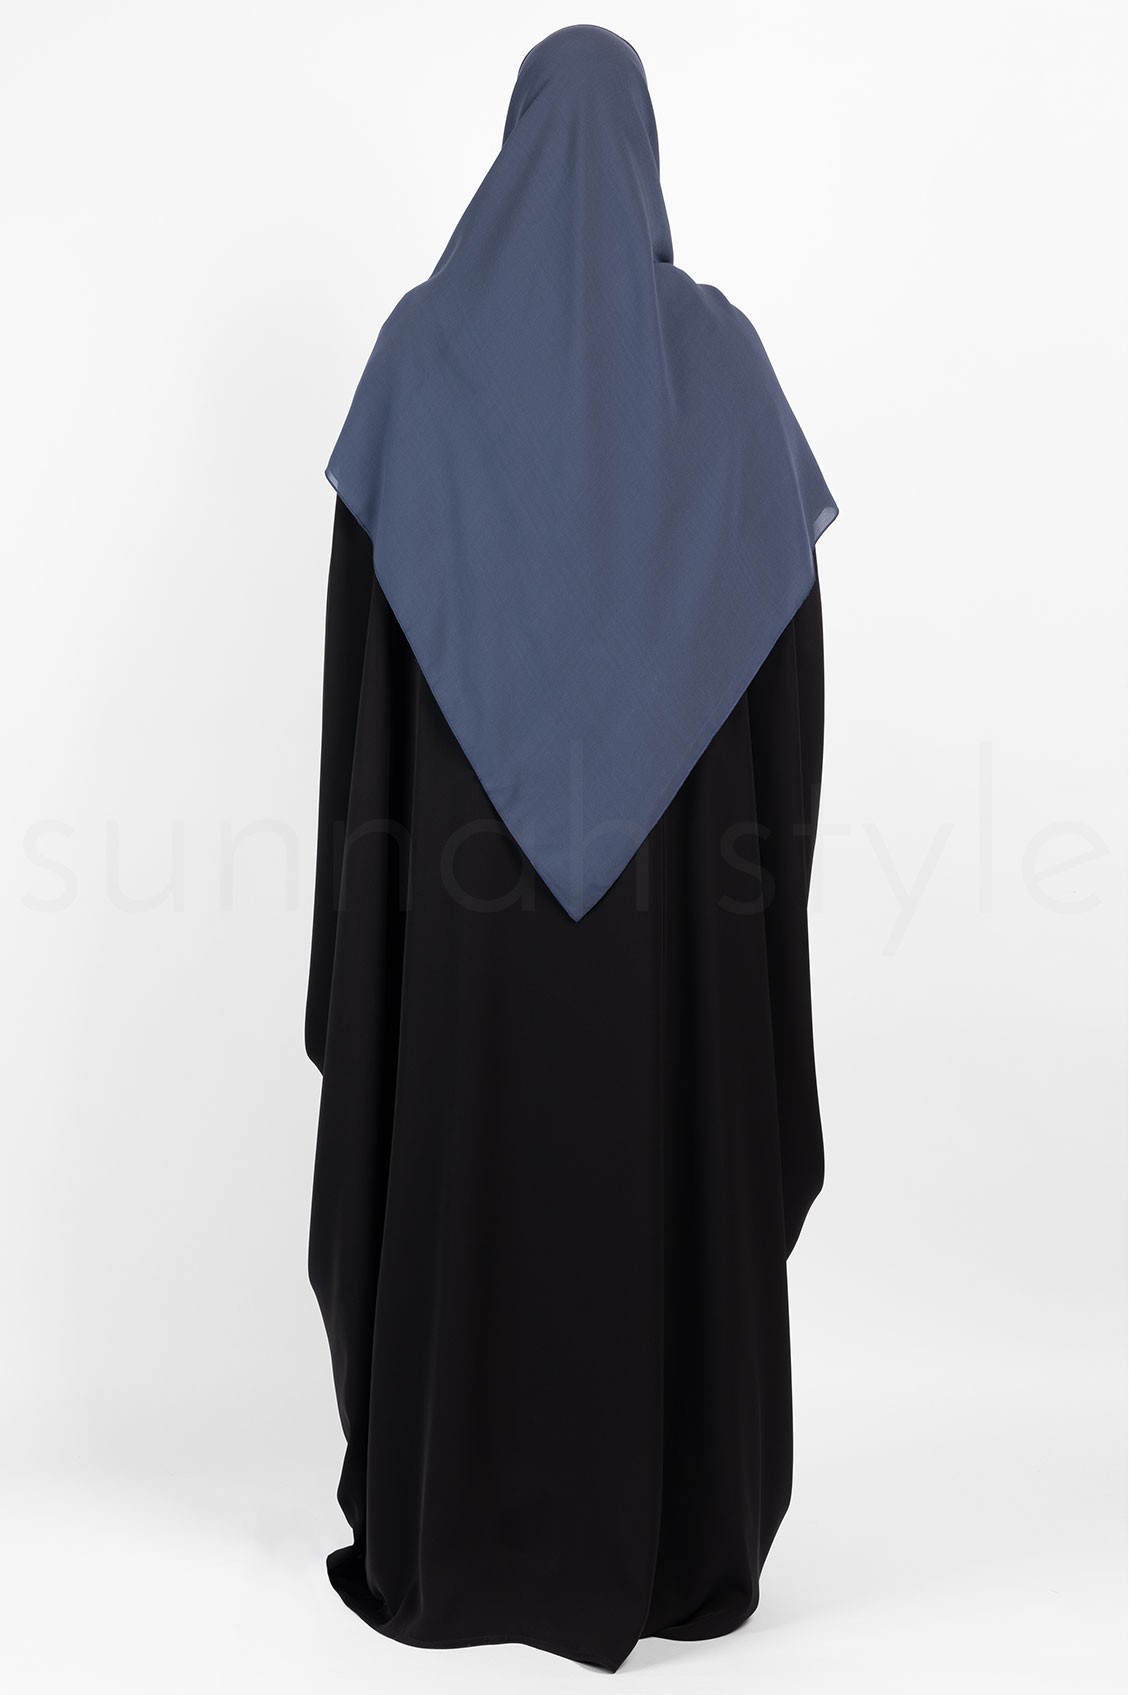 Sunnah Style Essentials Square Hijab Large Steel Blue